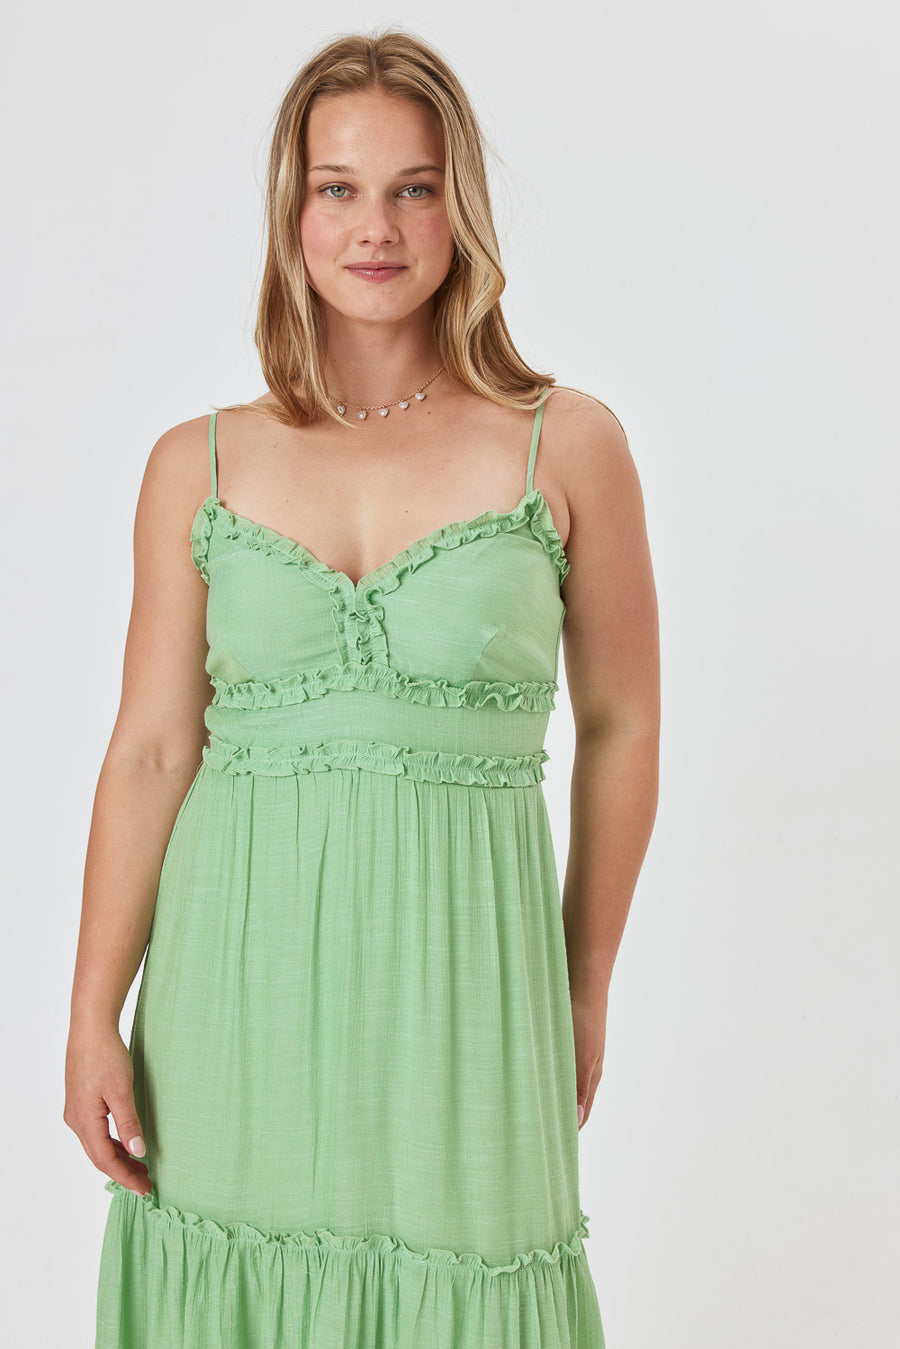 Light Green Sleeveless Ruffle Midi Dress - Trixxi Clothing